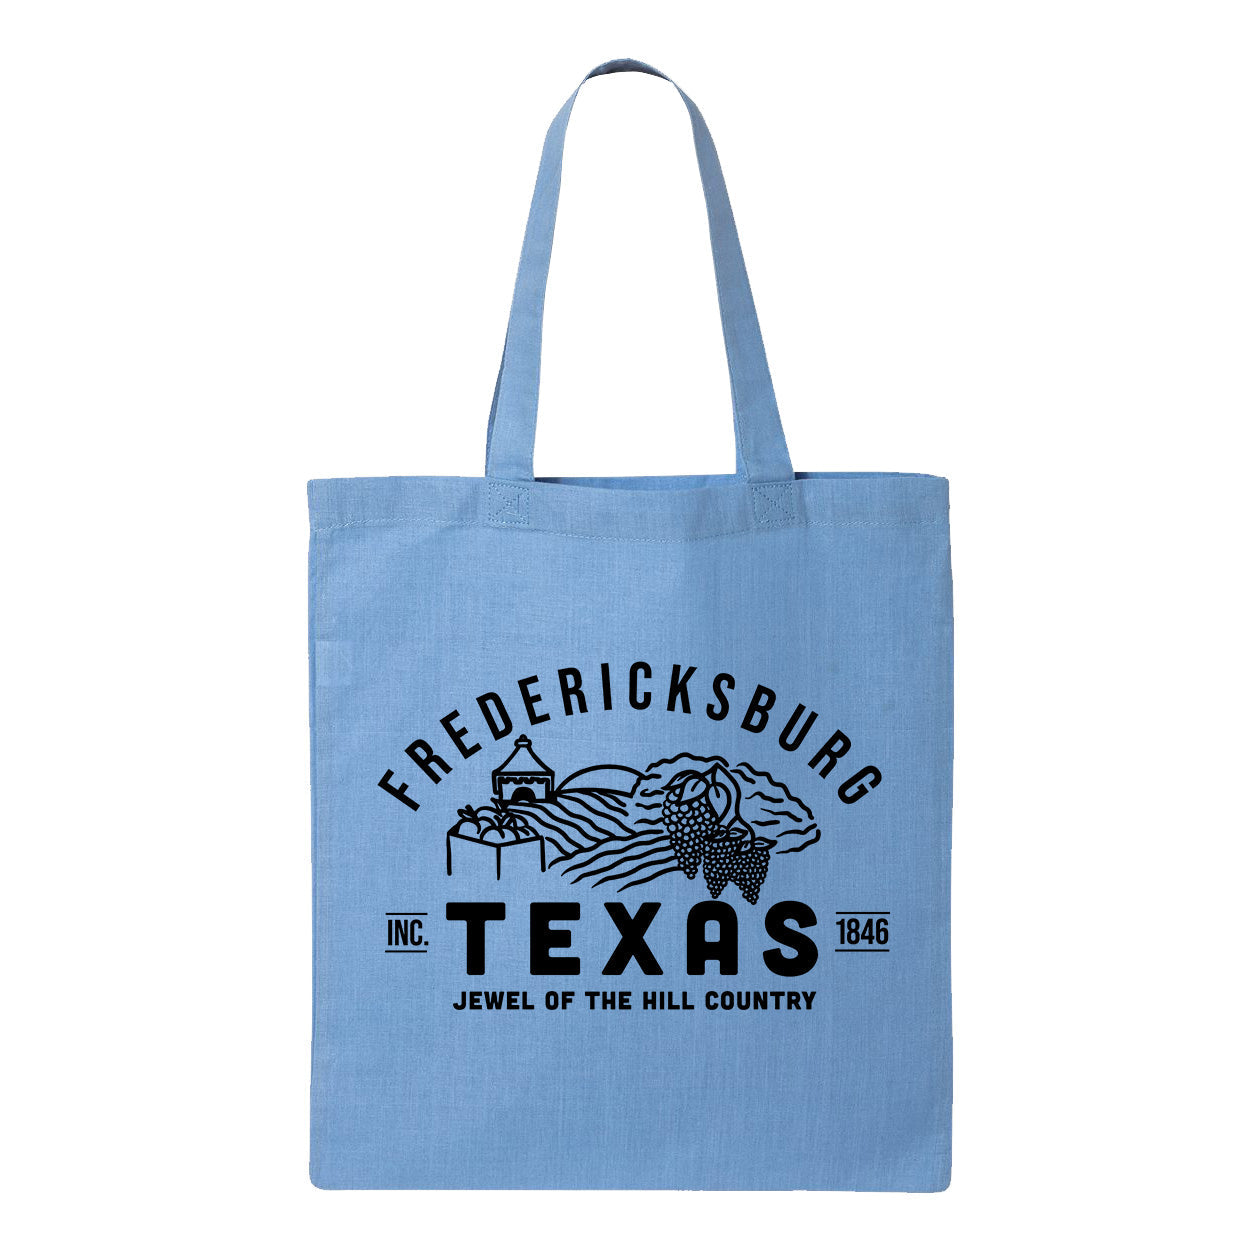 Fredericksburg Texas Tote Bag